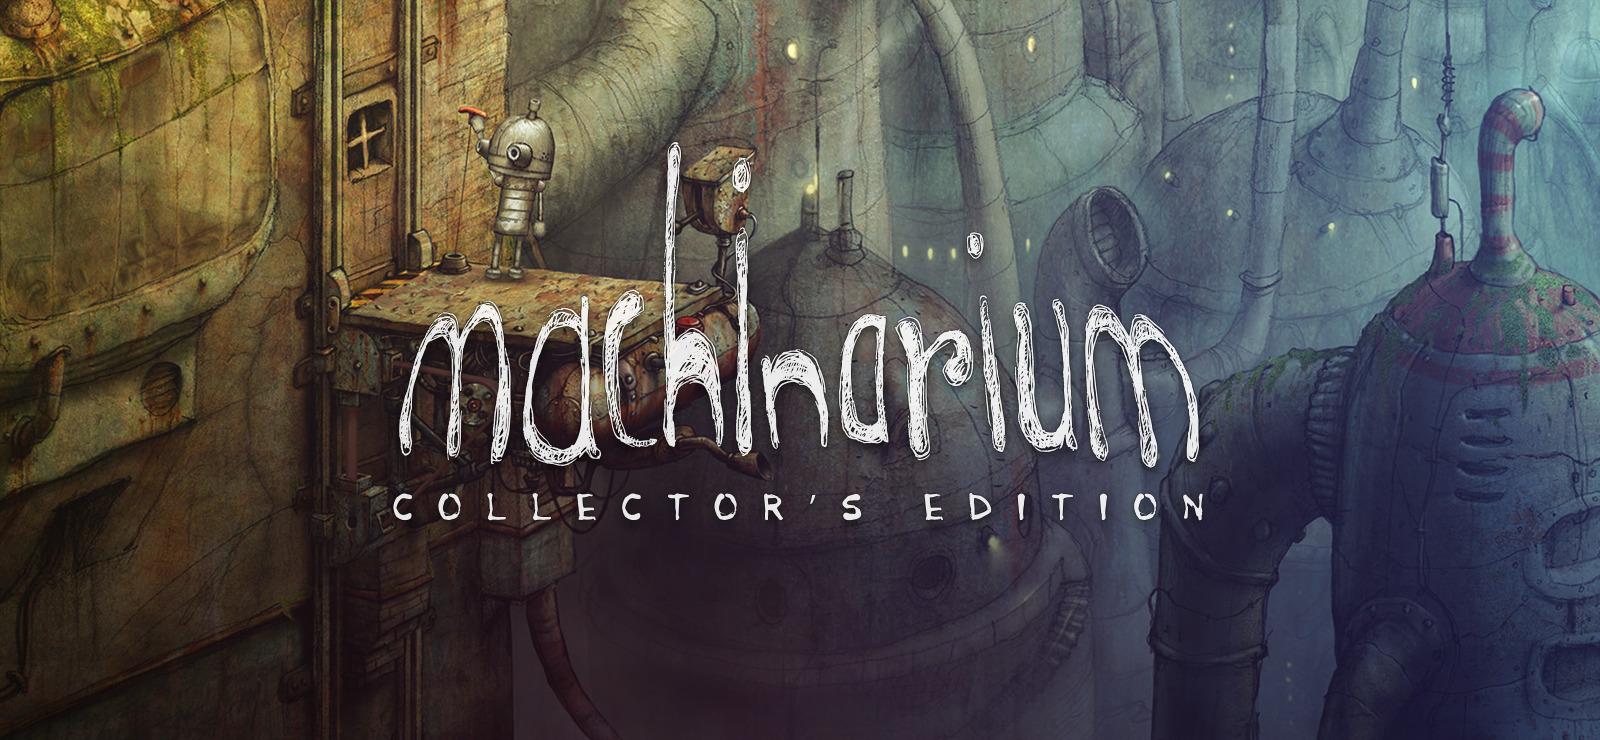 Machinarium Collector's Edition on GOG.com